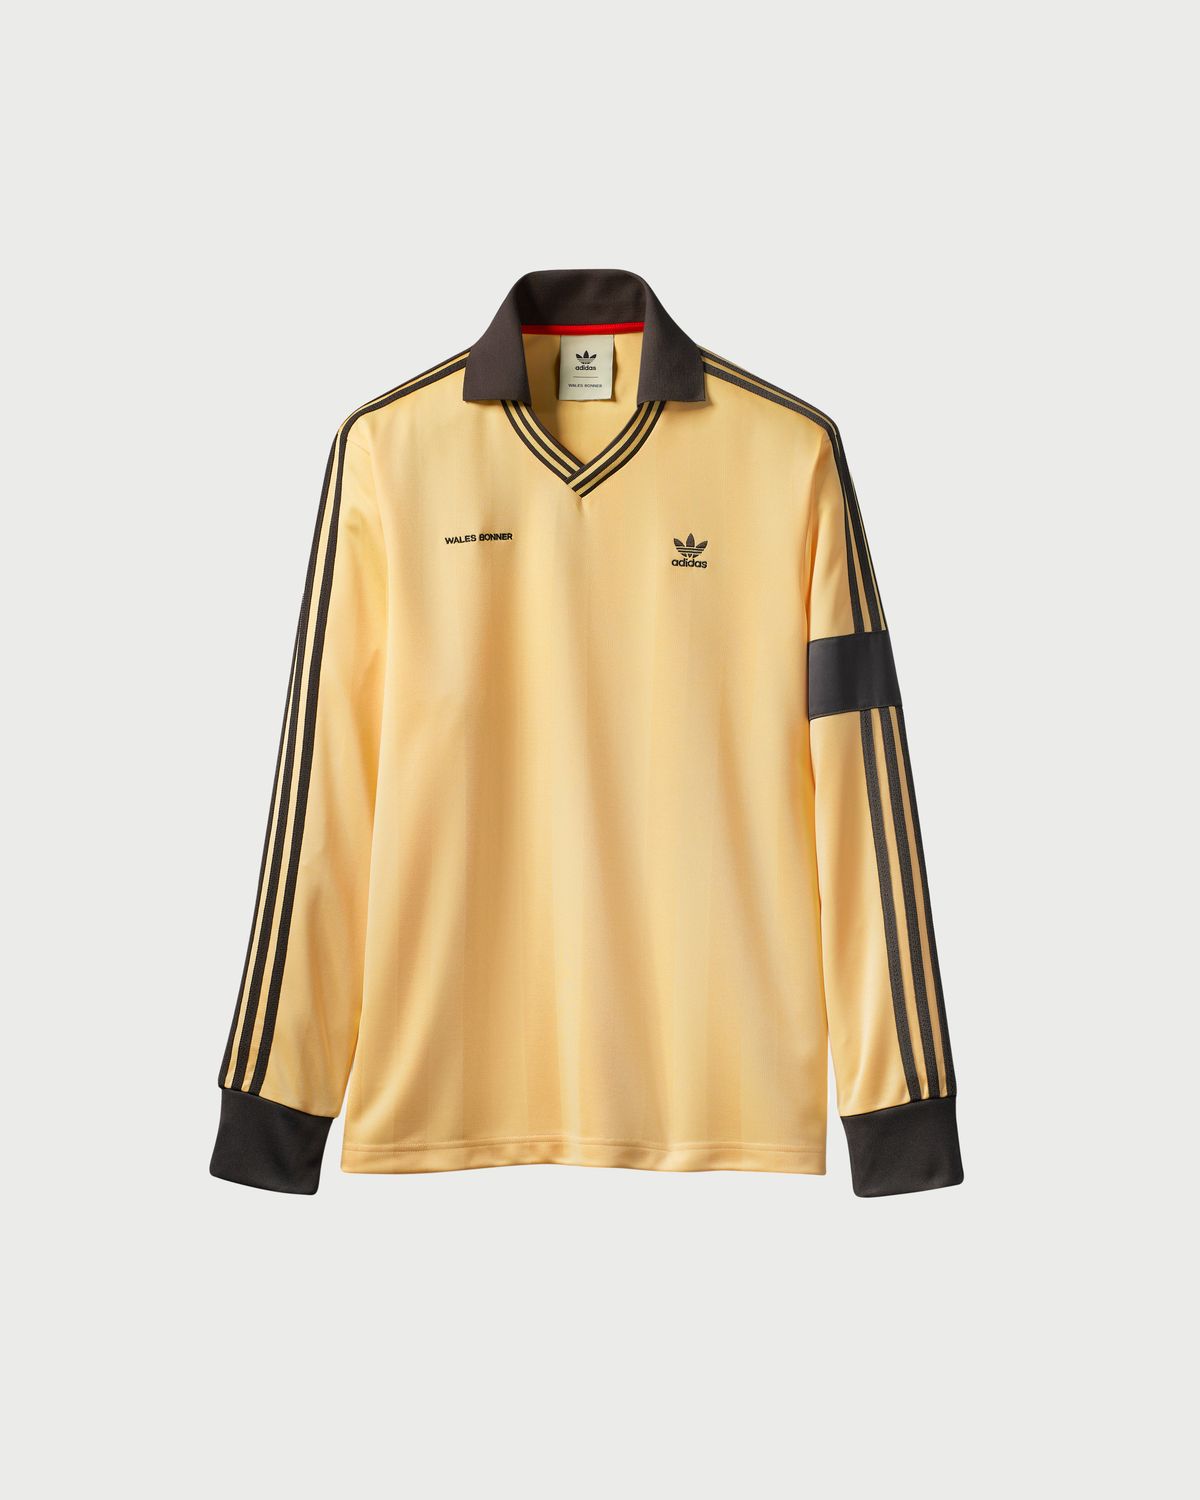 Adidas x Wales Bonner – Football Jersey Orange Tint - Polos - Yellow - Image 1